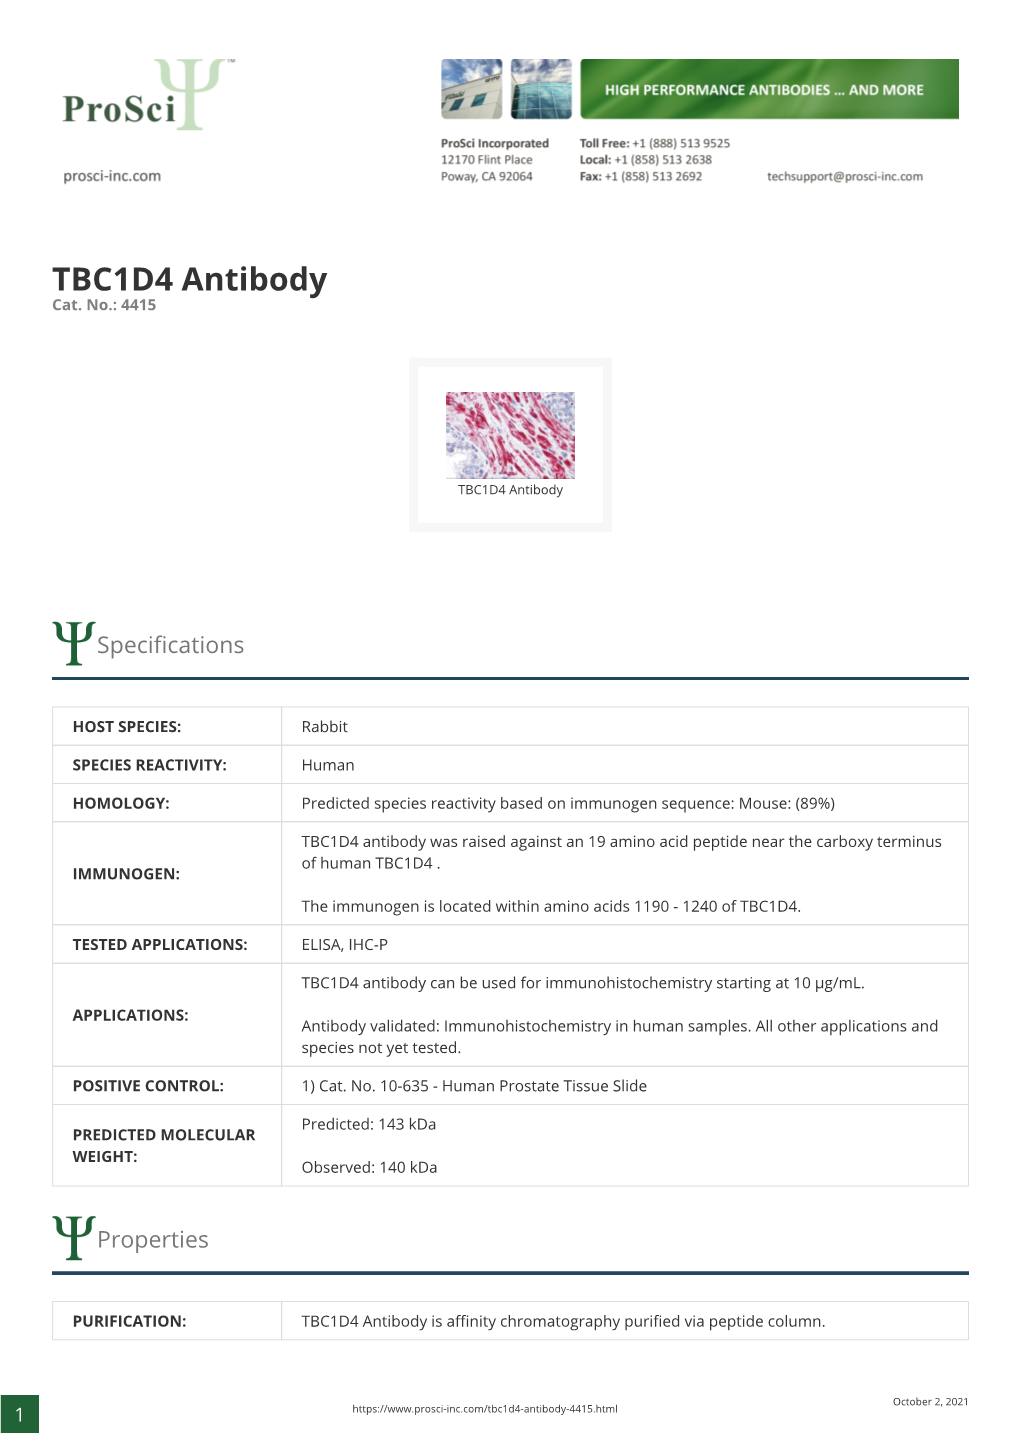 TBC1D4 Antibody Cat